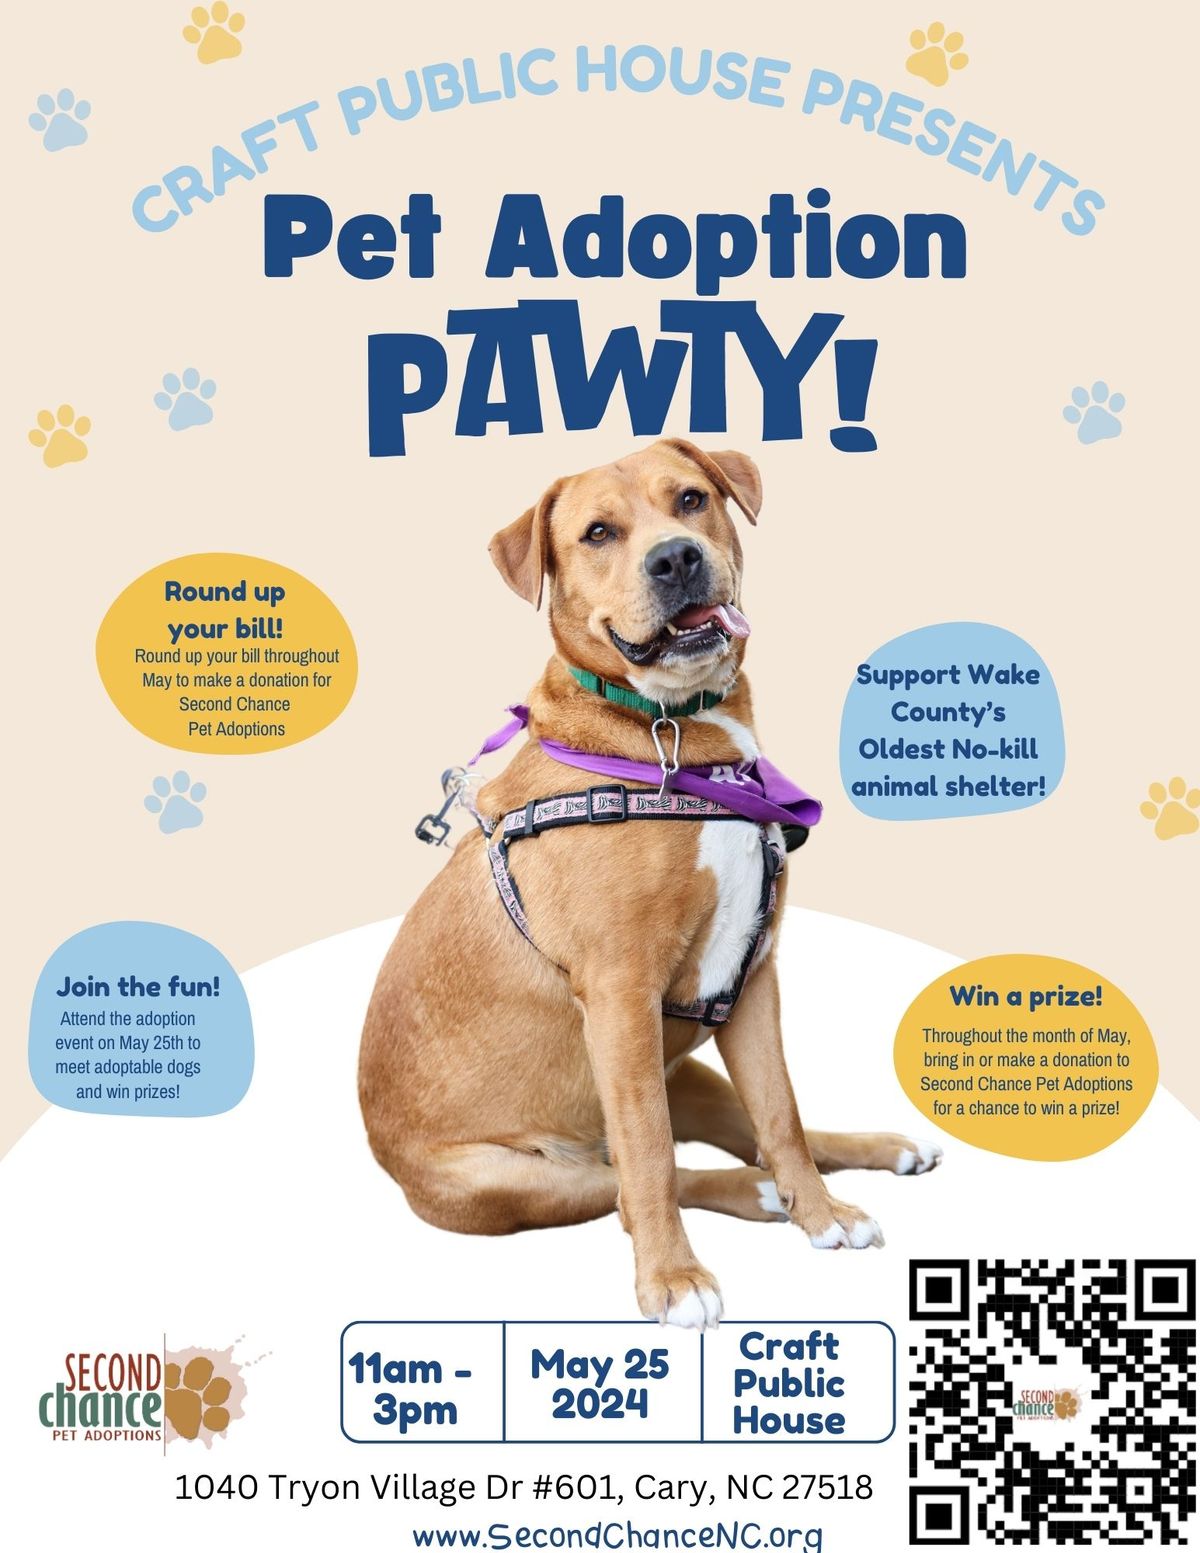 Pet Adoption Pawty at Craft Public House